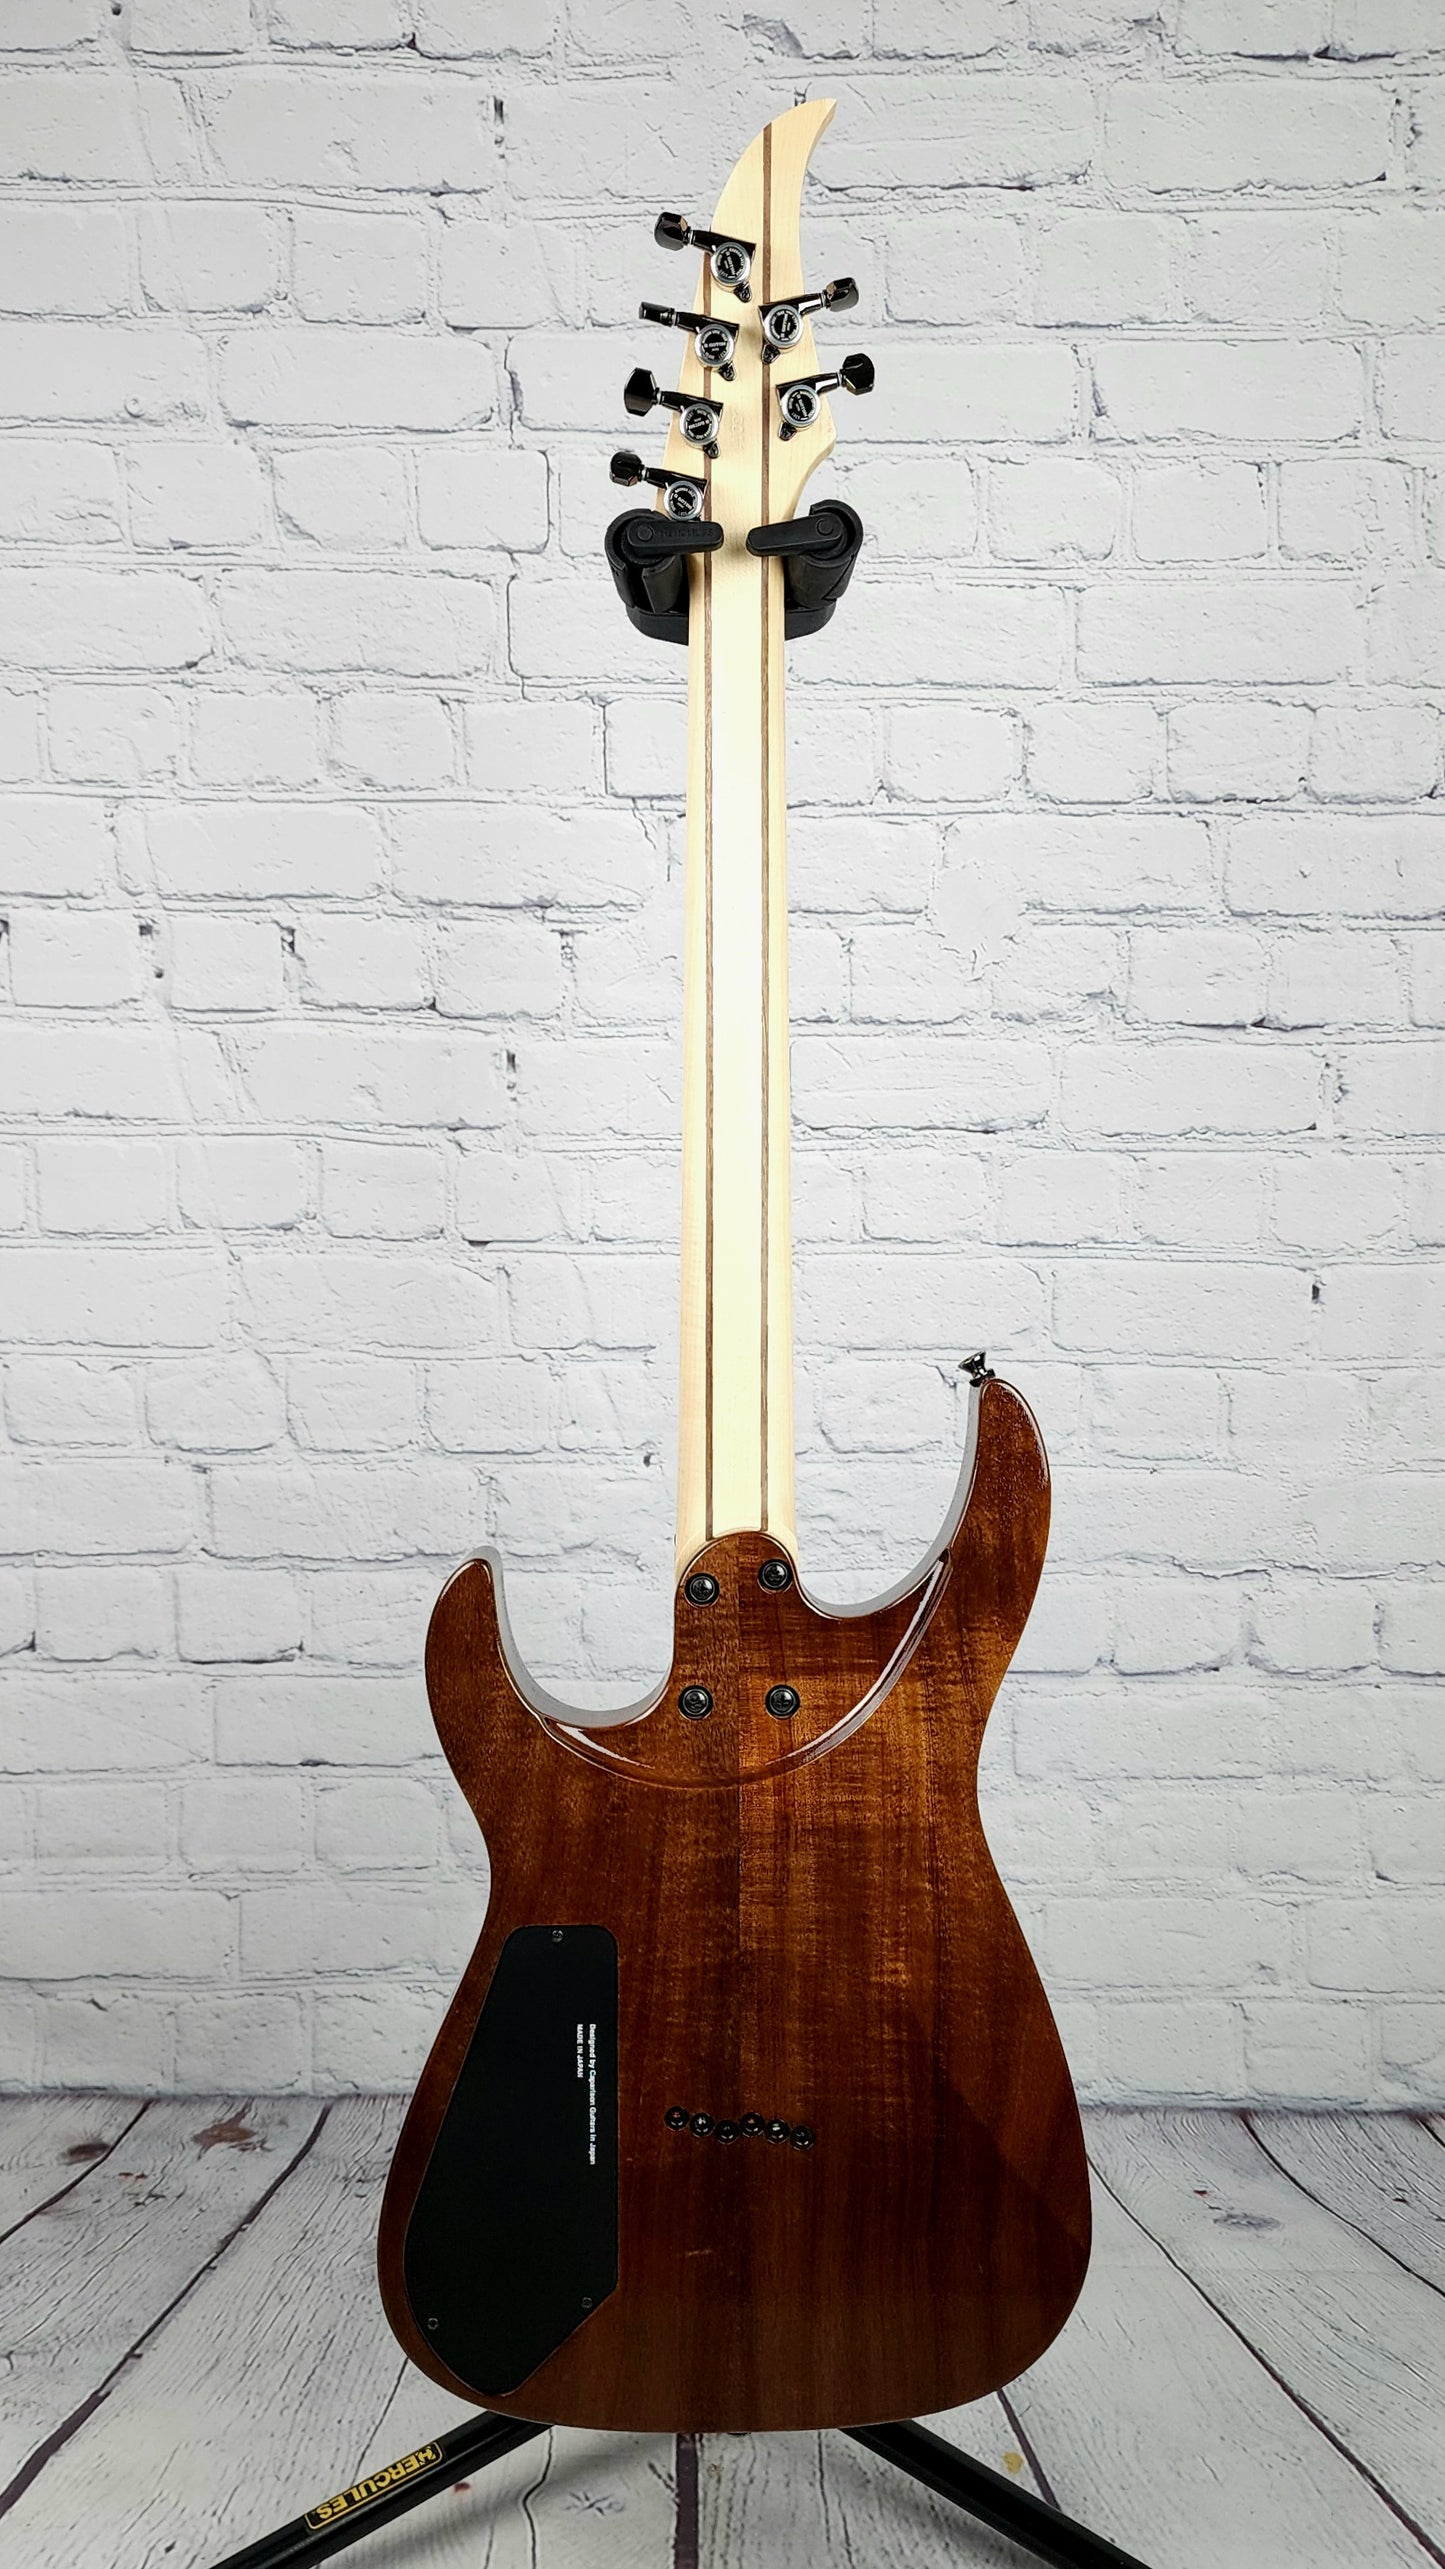 Caparison Dellinger WB-FX EF 6 String Electric Guitar Natural Stainless Frets